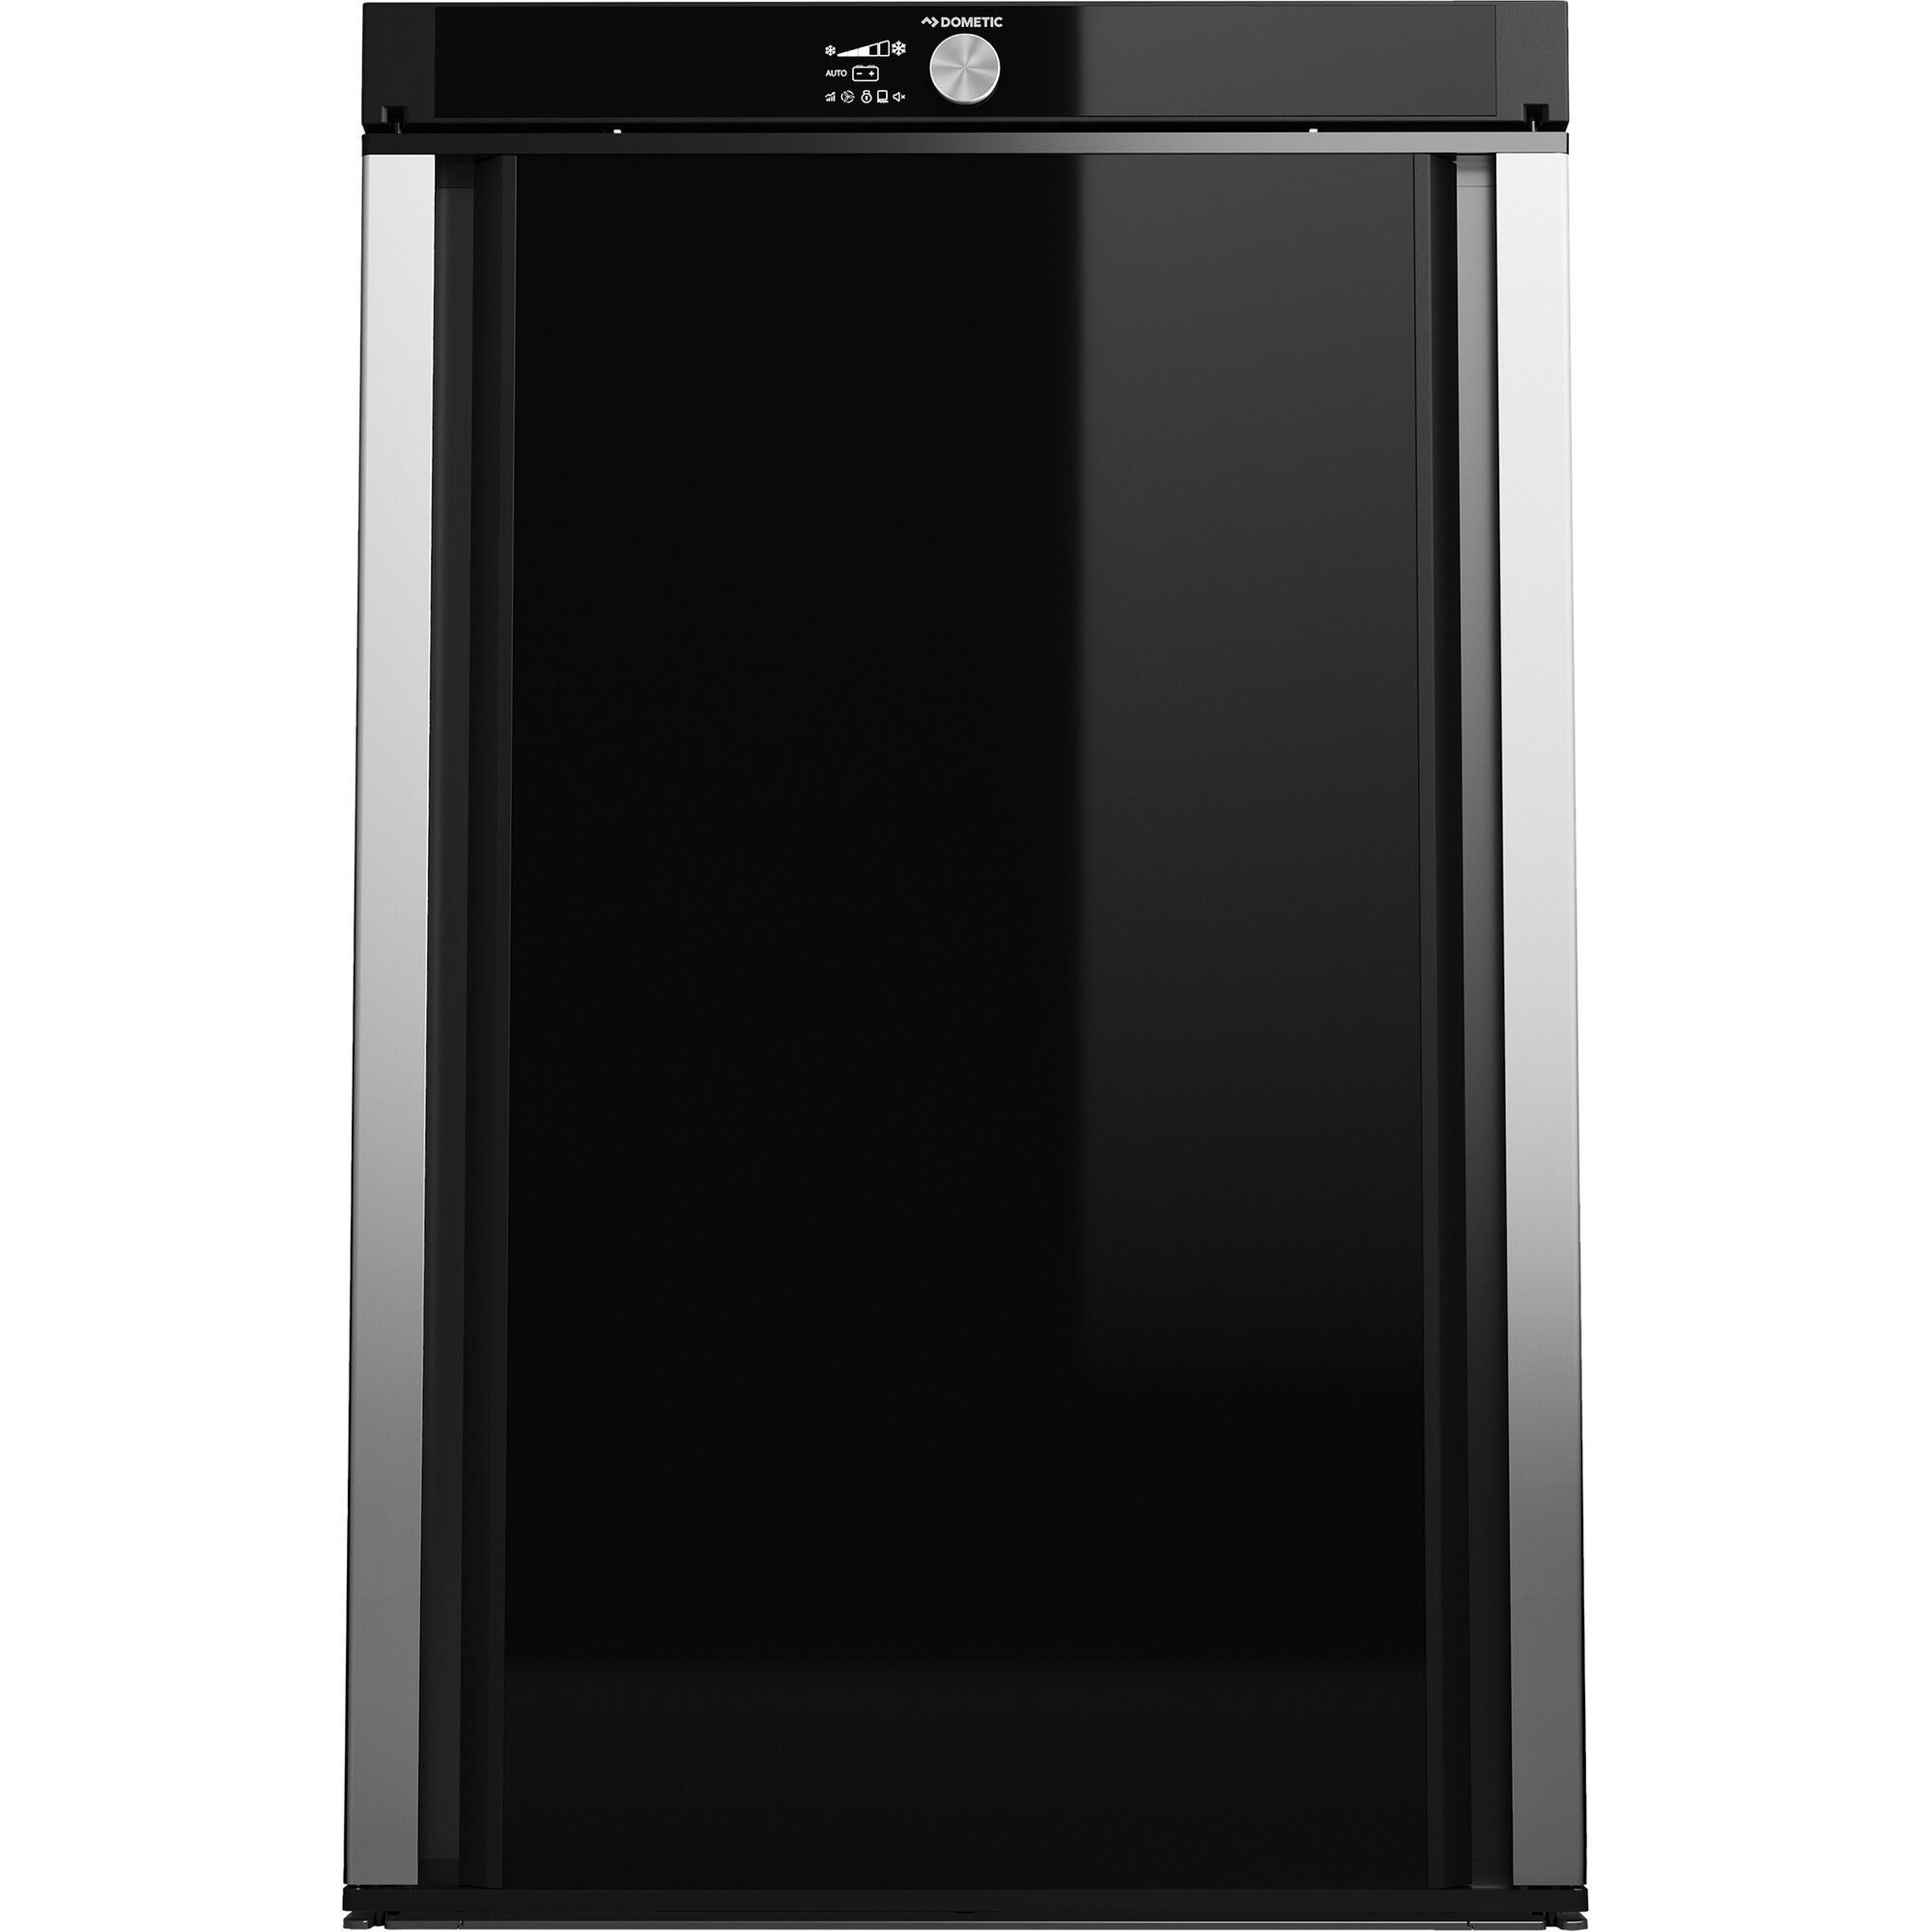 Absorberkühlschrank Dometic RM